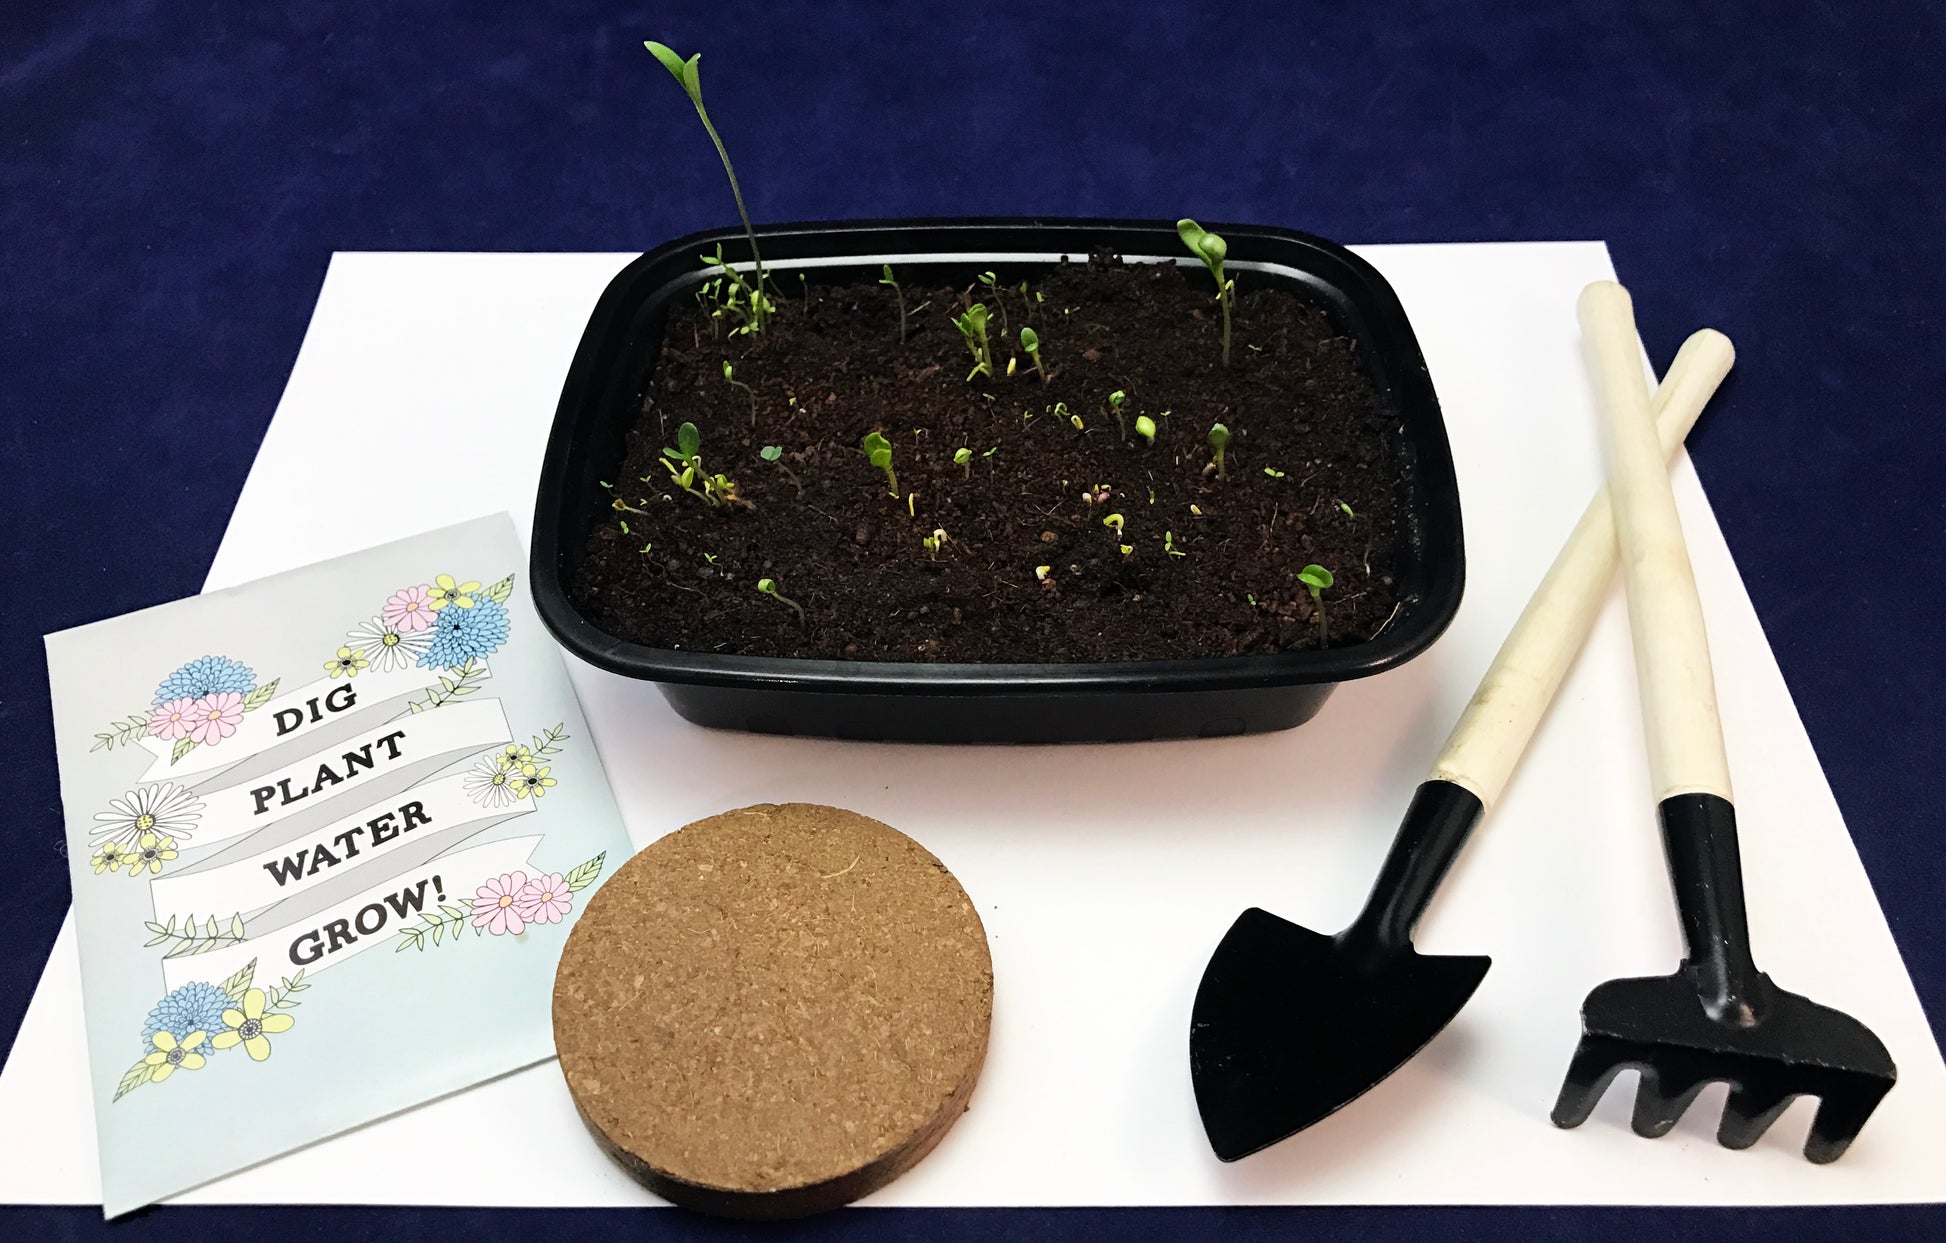 Plant your own garden children's activity garden tools kids wildflower seeds